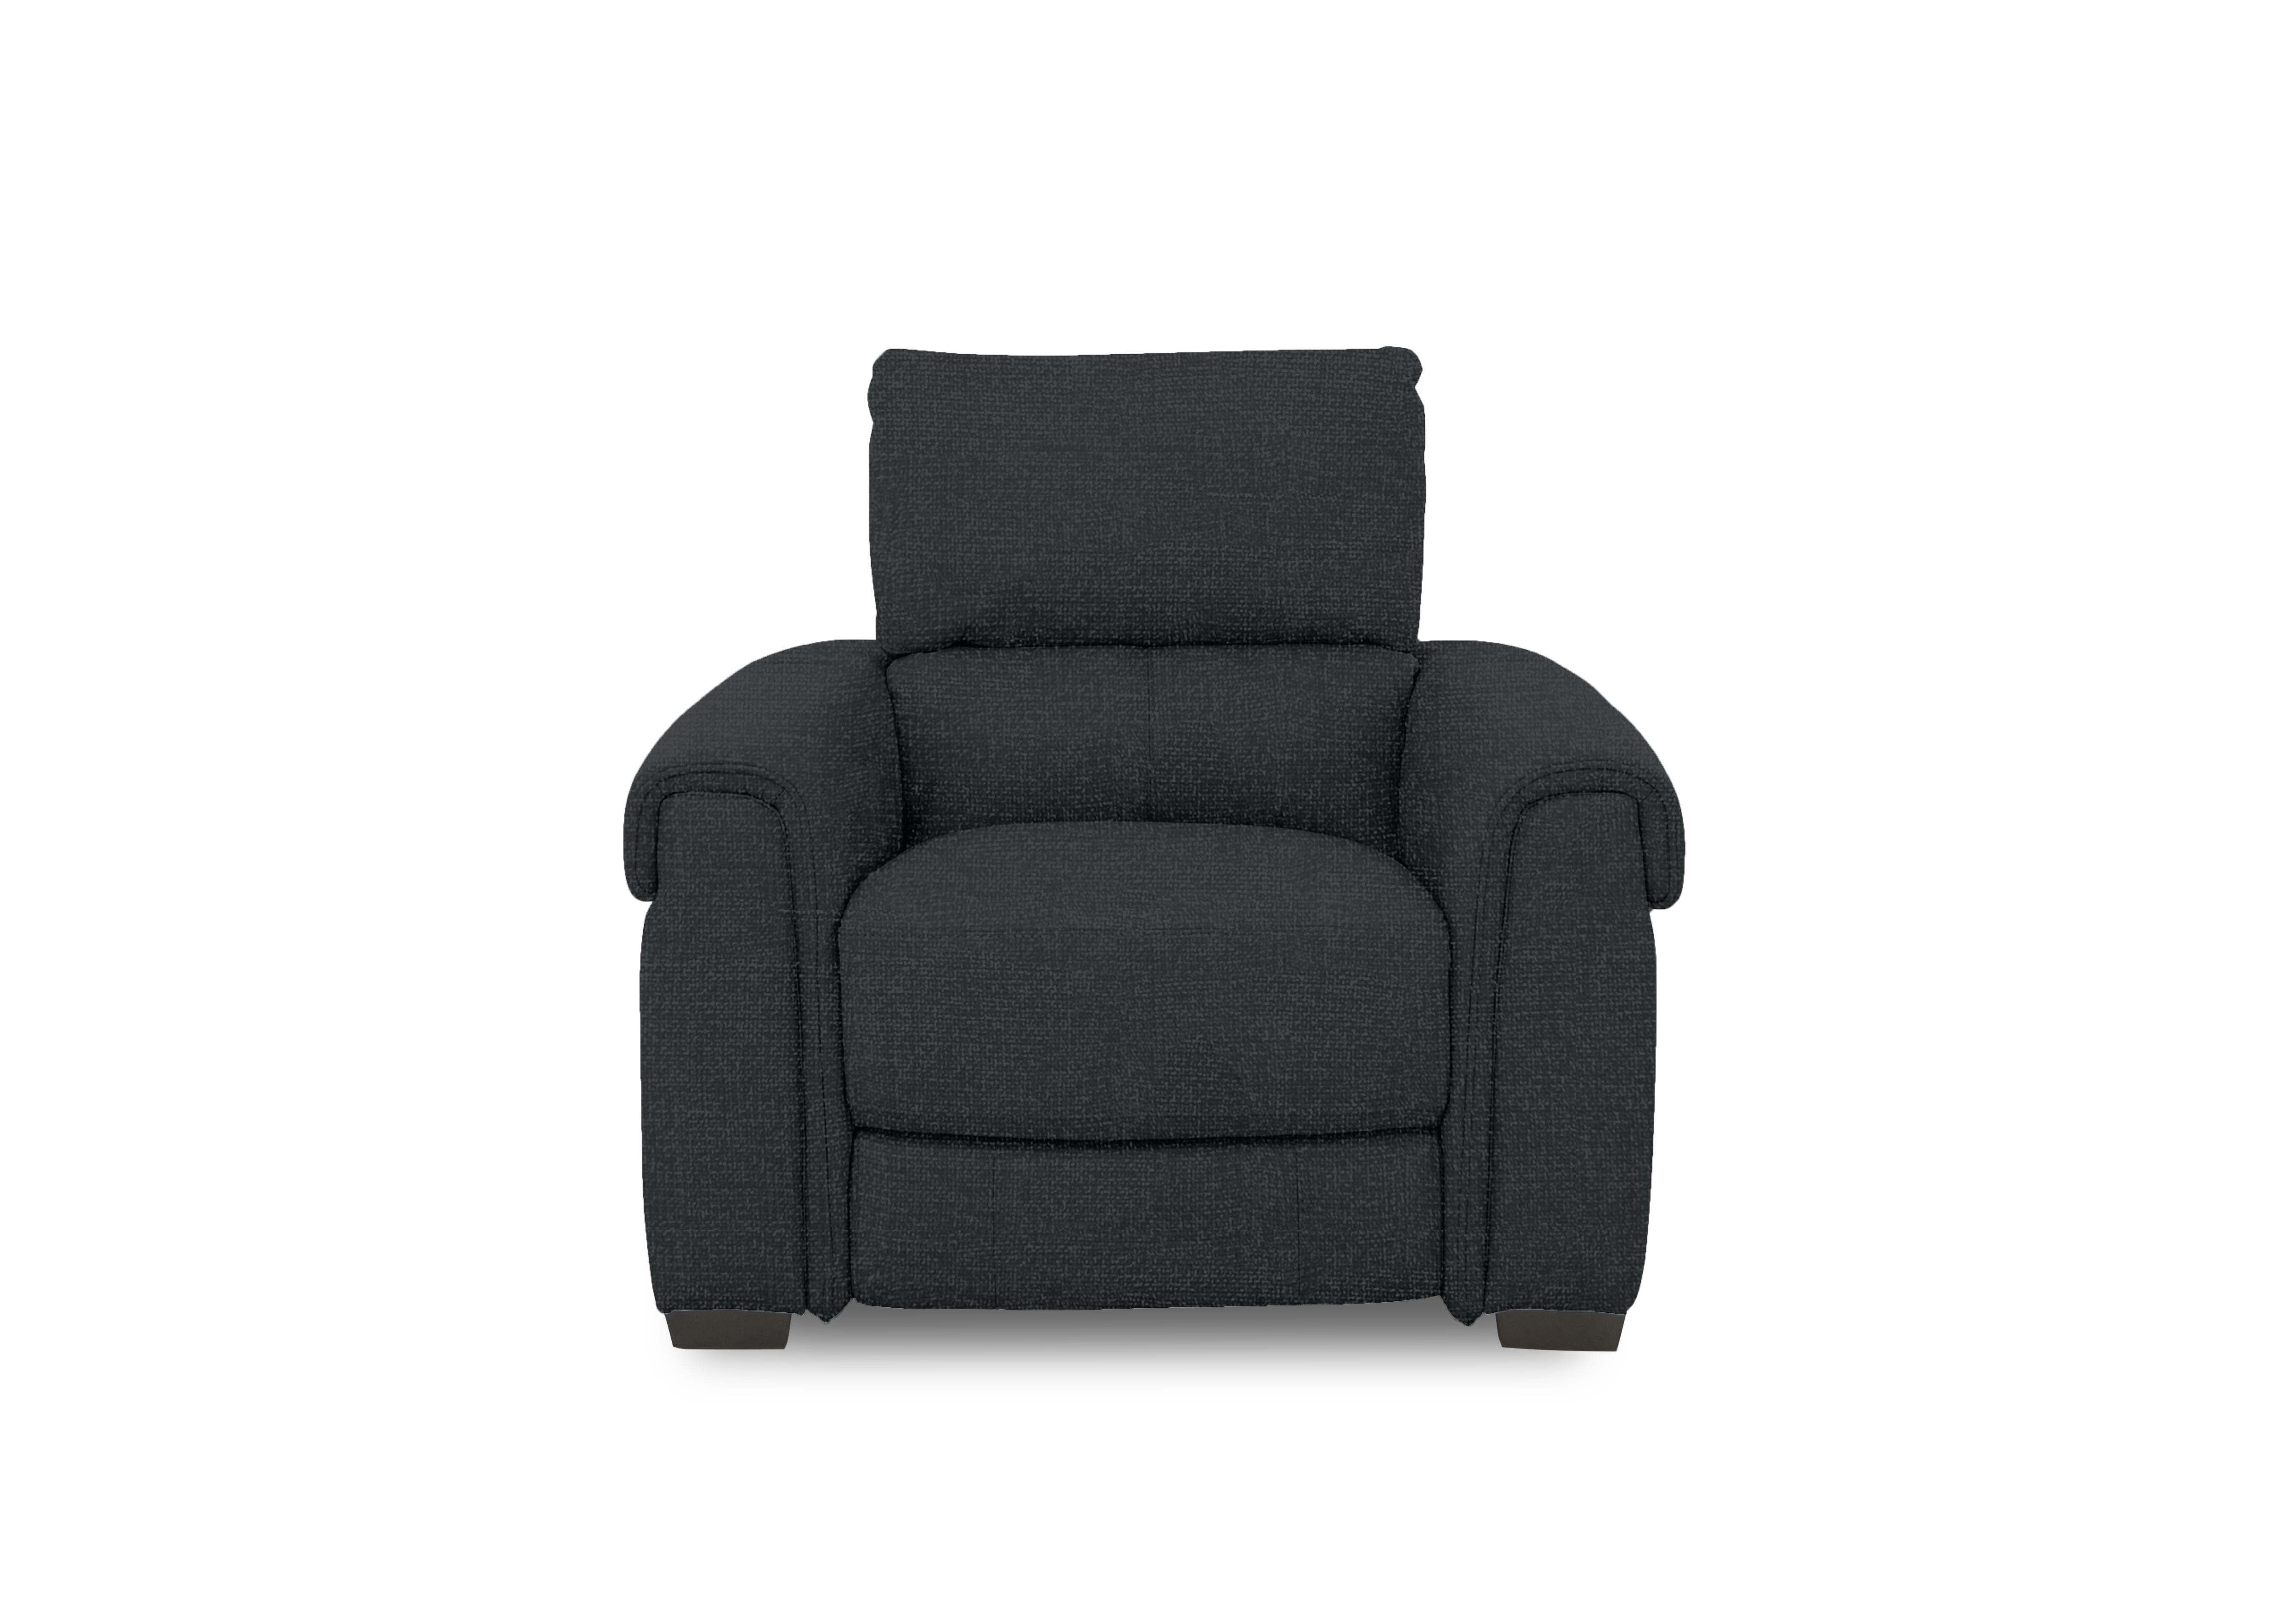 Nixon Fabric Chair in Fab-Cac-R463 Black Mica on Furniture Village